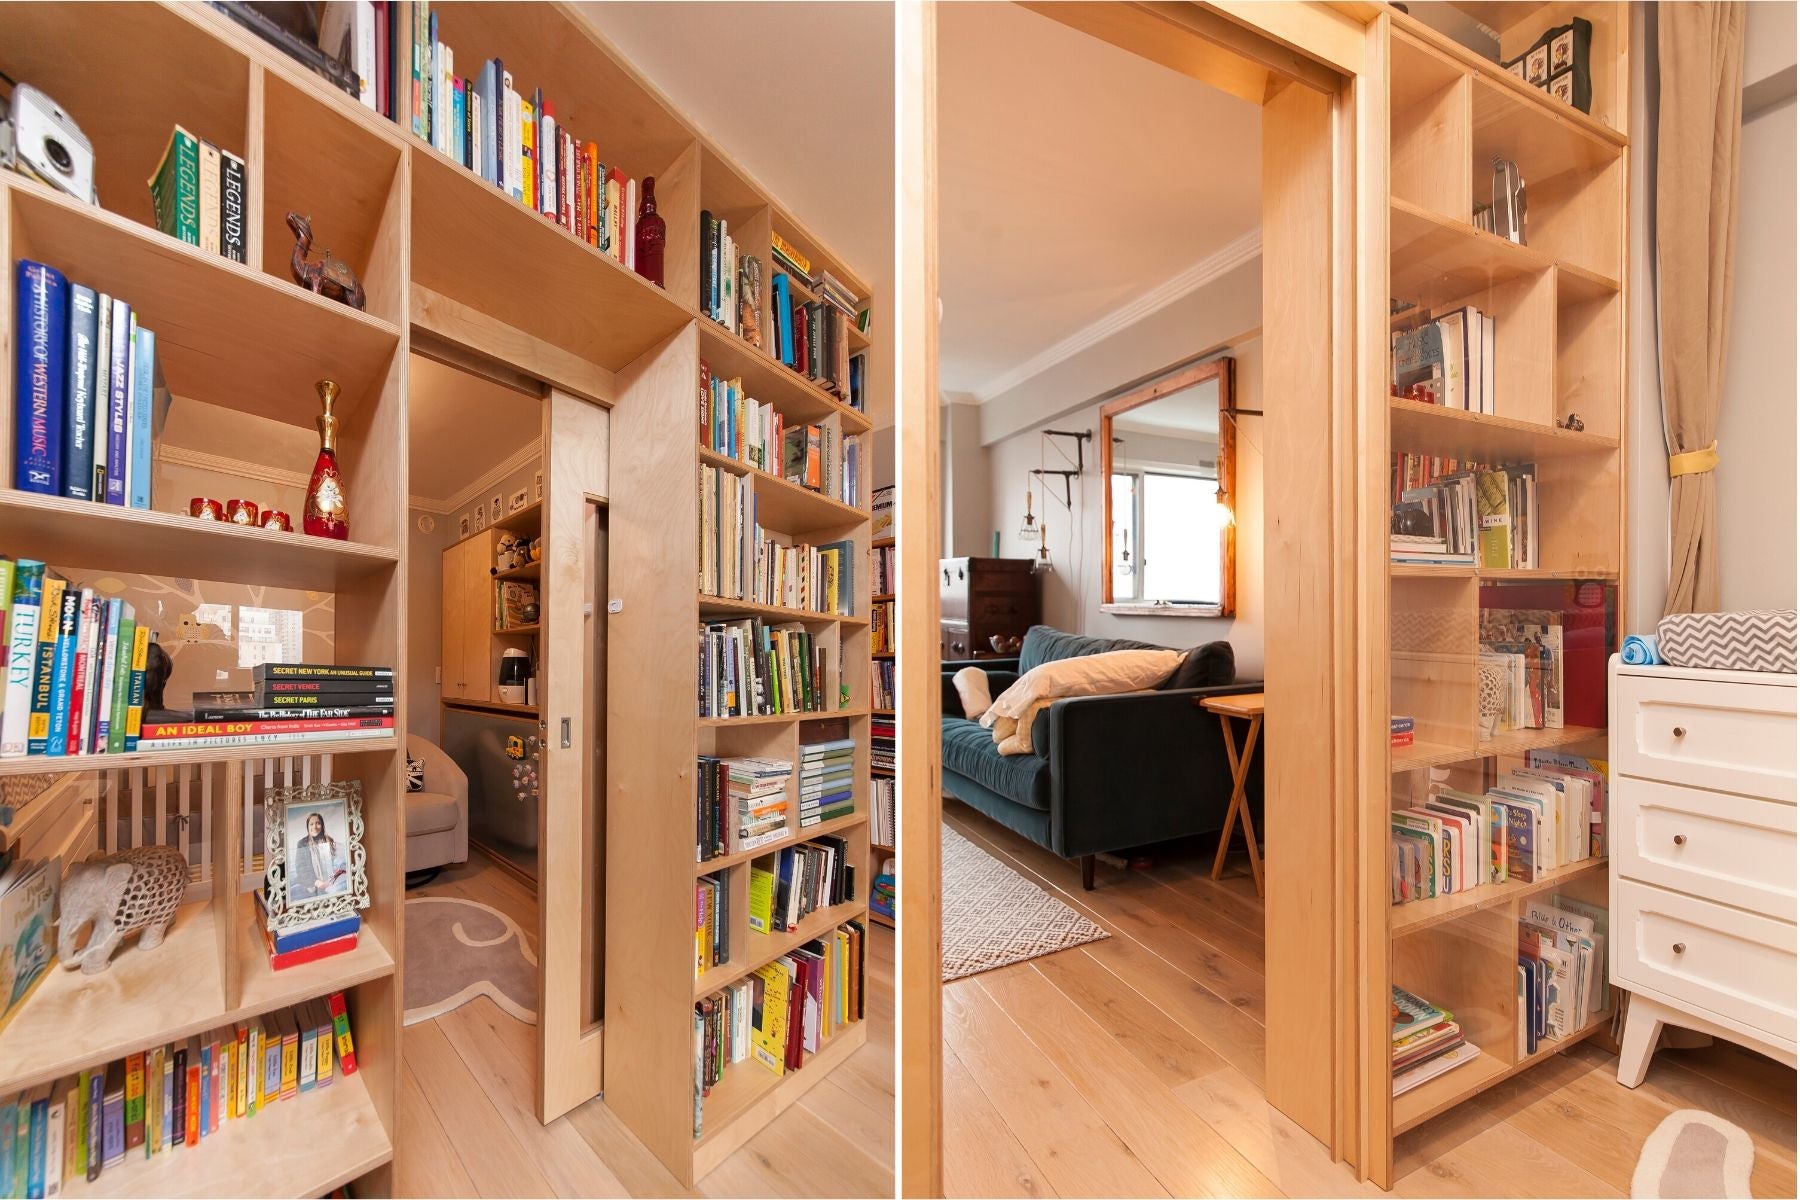 Bookshelf door opens to a cozy room with a sofa and dresser.